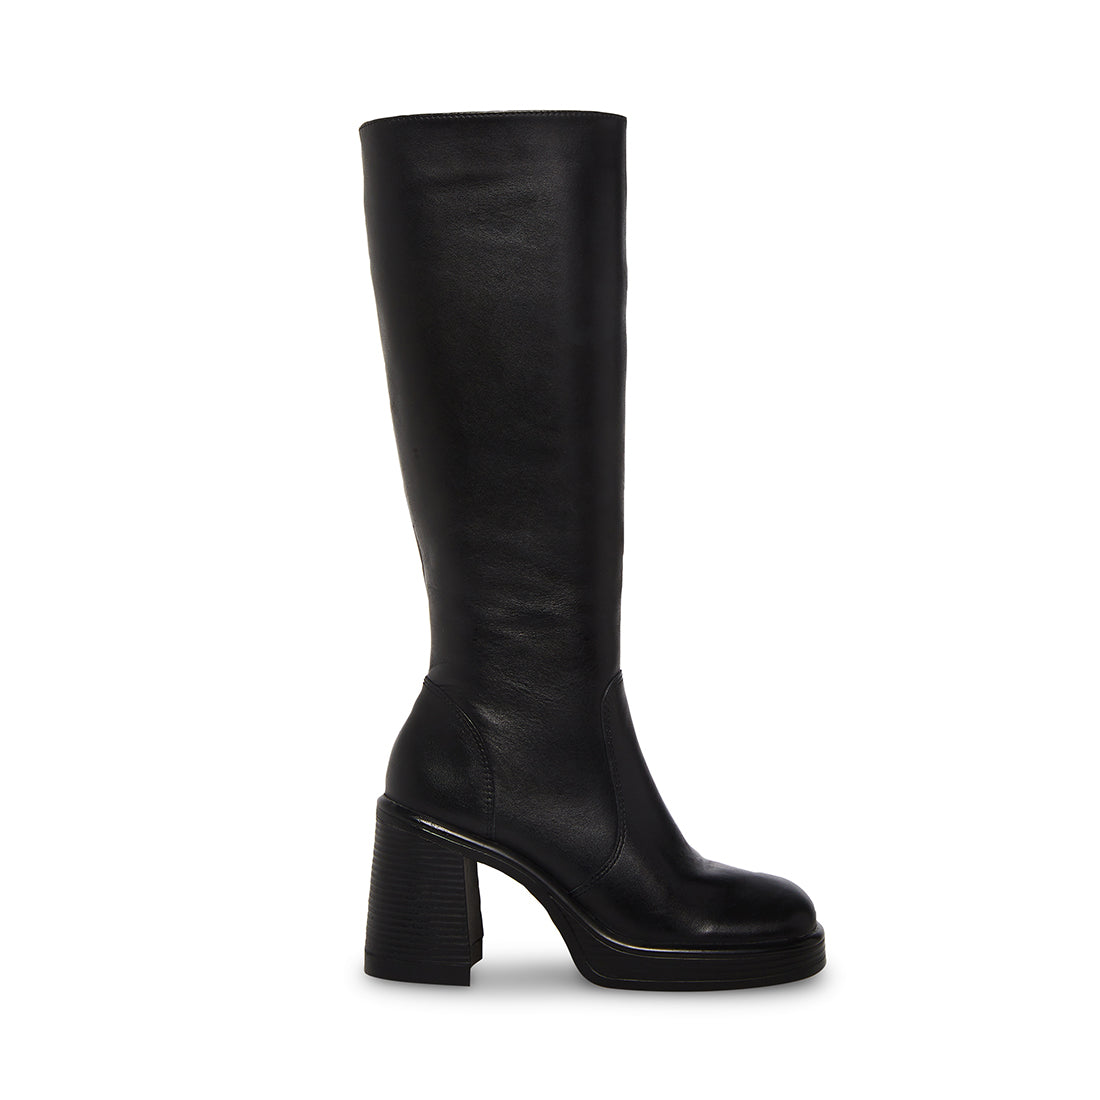 FANATIK Black Leather Platform Boot | Women's Knee High Boot – Steve Madden